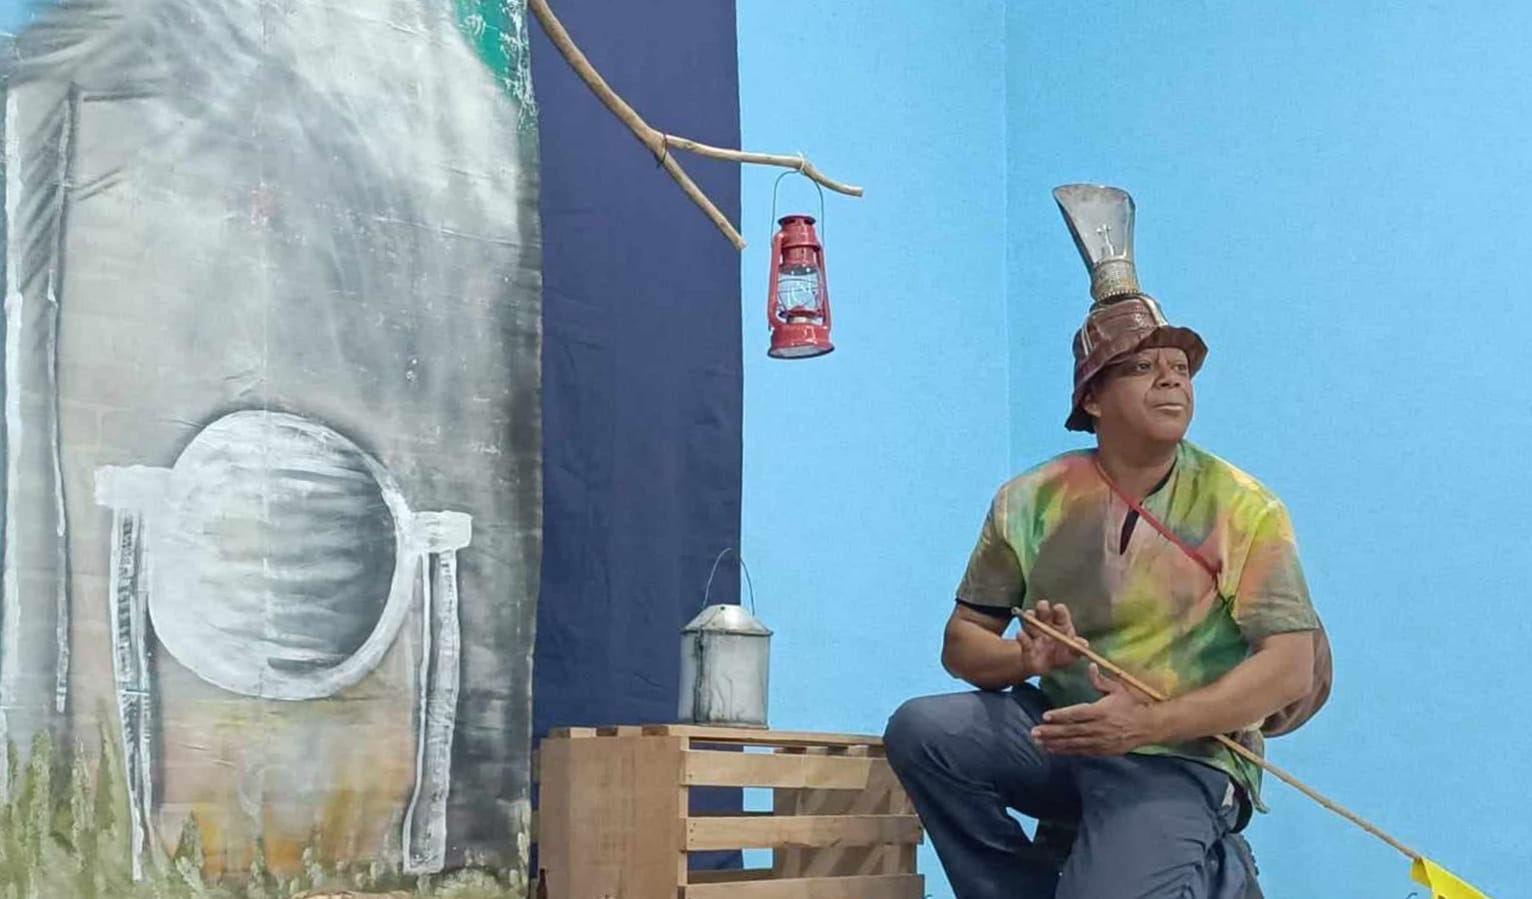 ‘O Teatro Vai à Escola’ project starts new season in Manaus